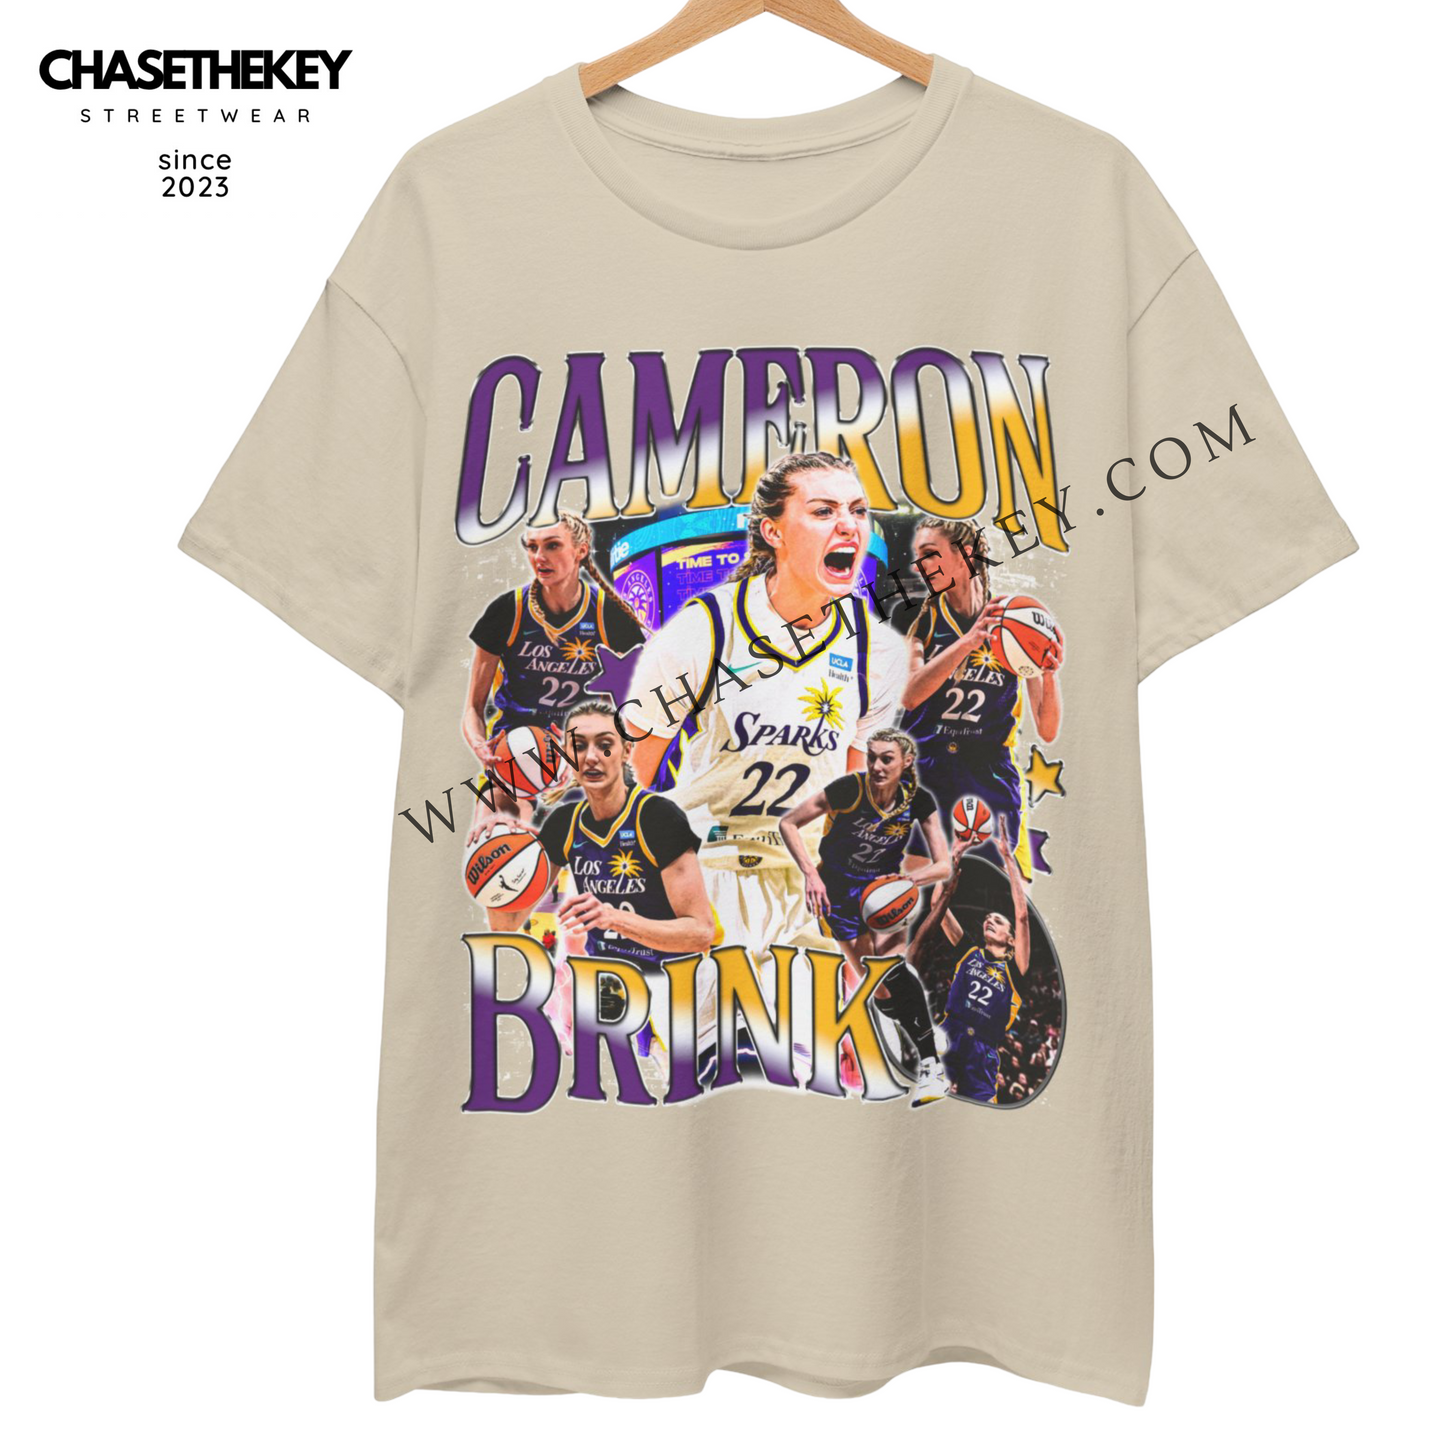 Cameron Brink Sparks Shirt